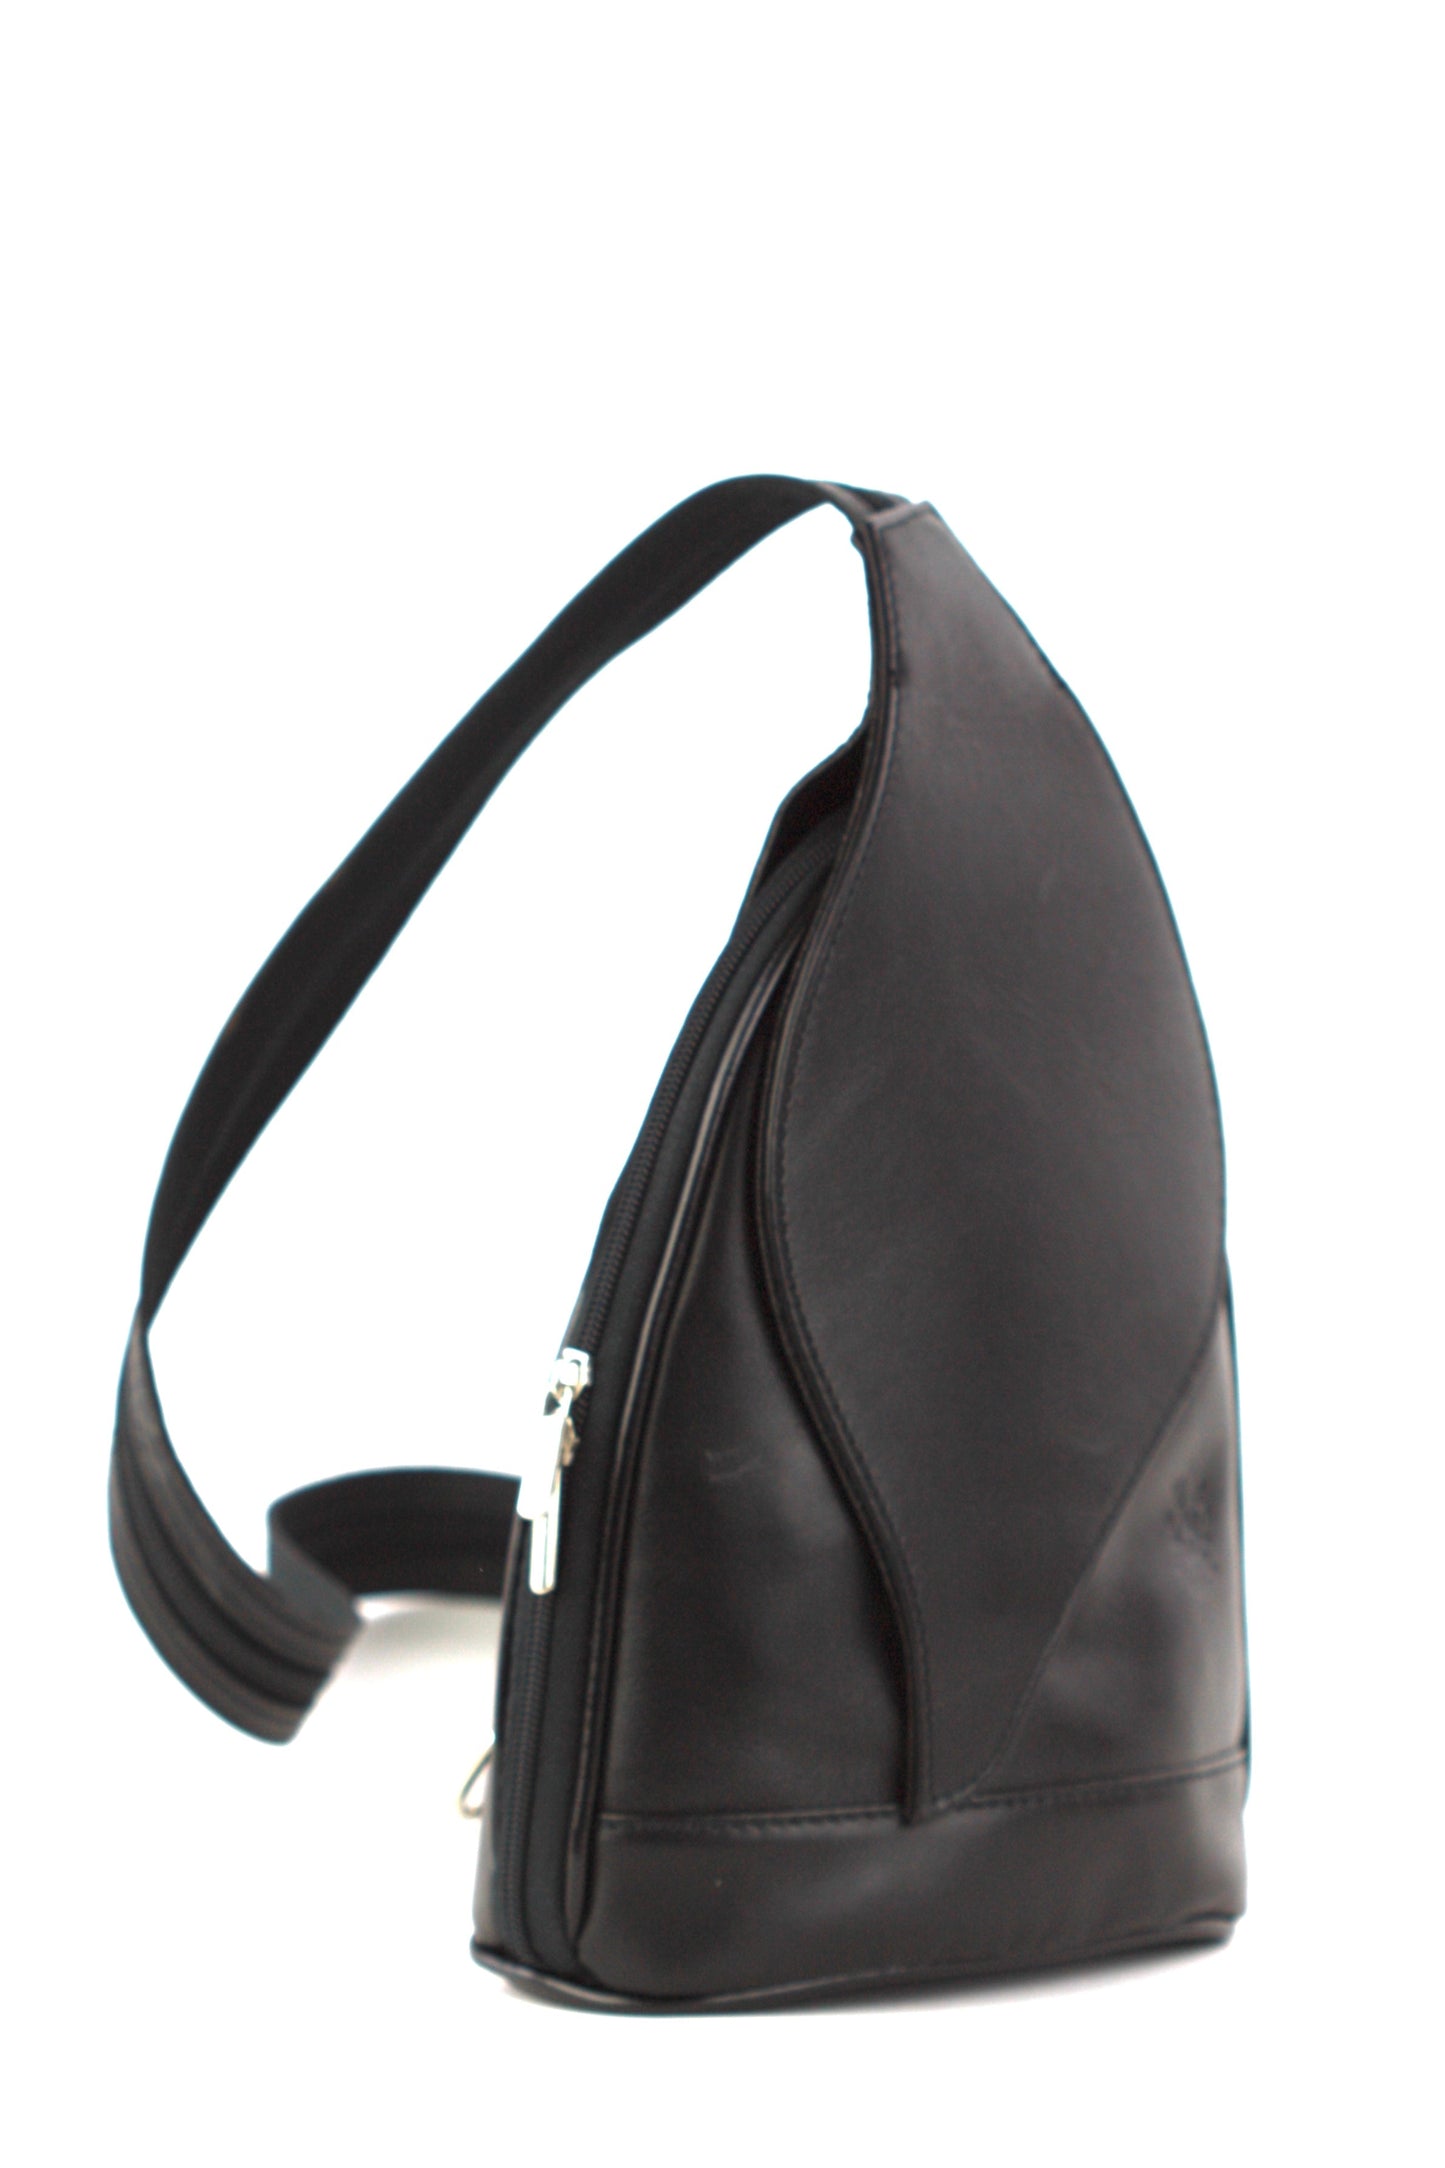 Foglia backpack in black